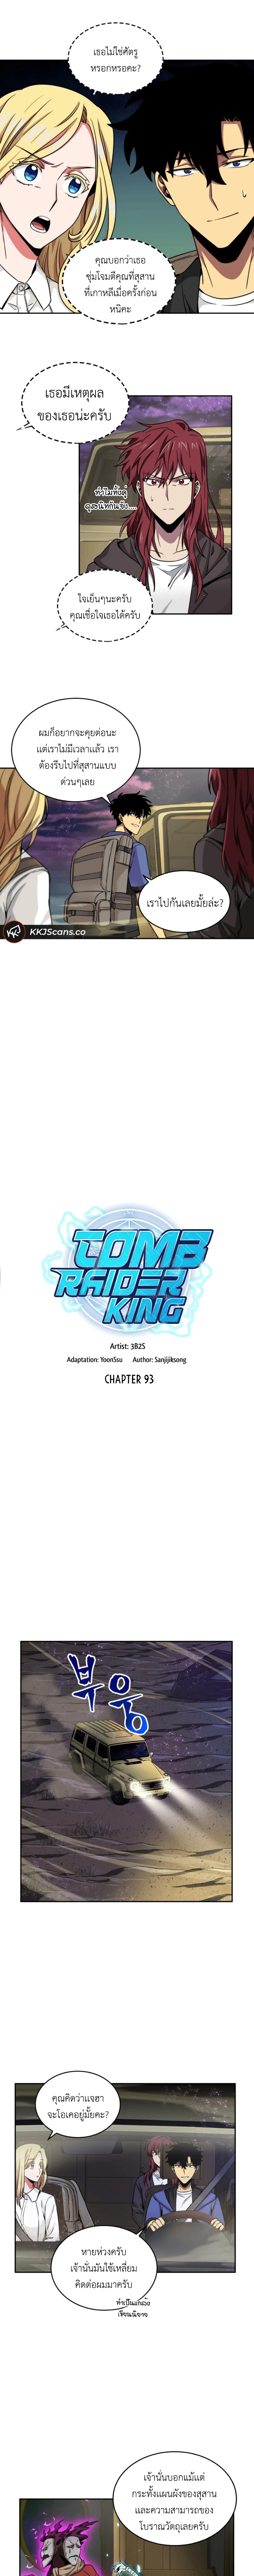 Tomb Raider King 93 (3)